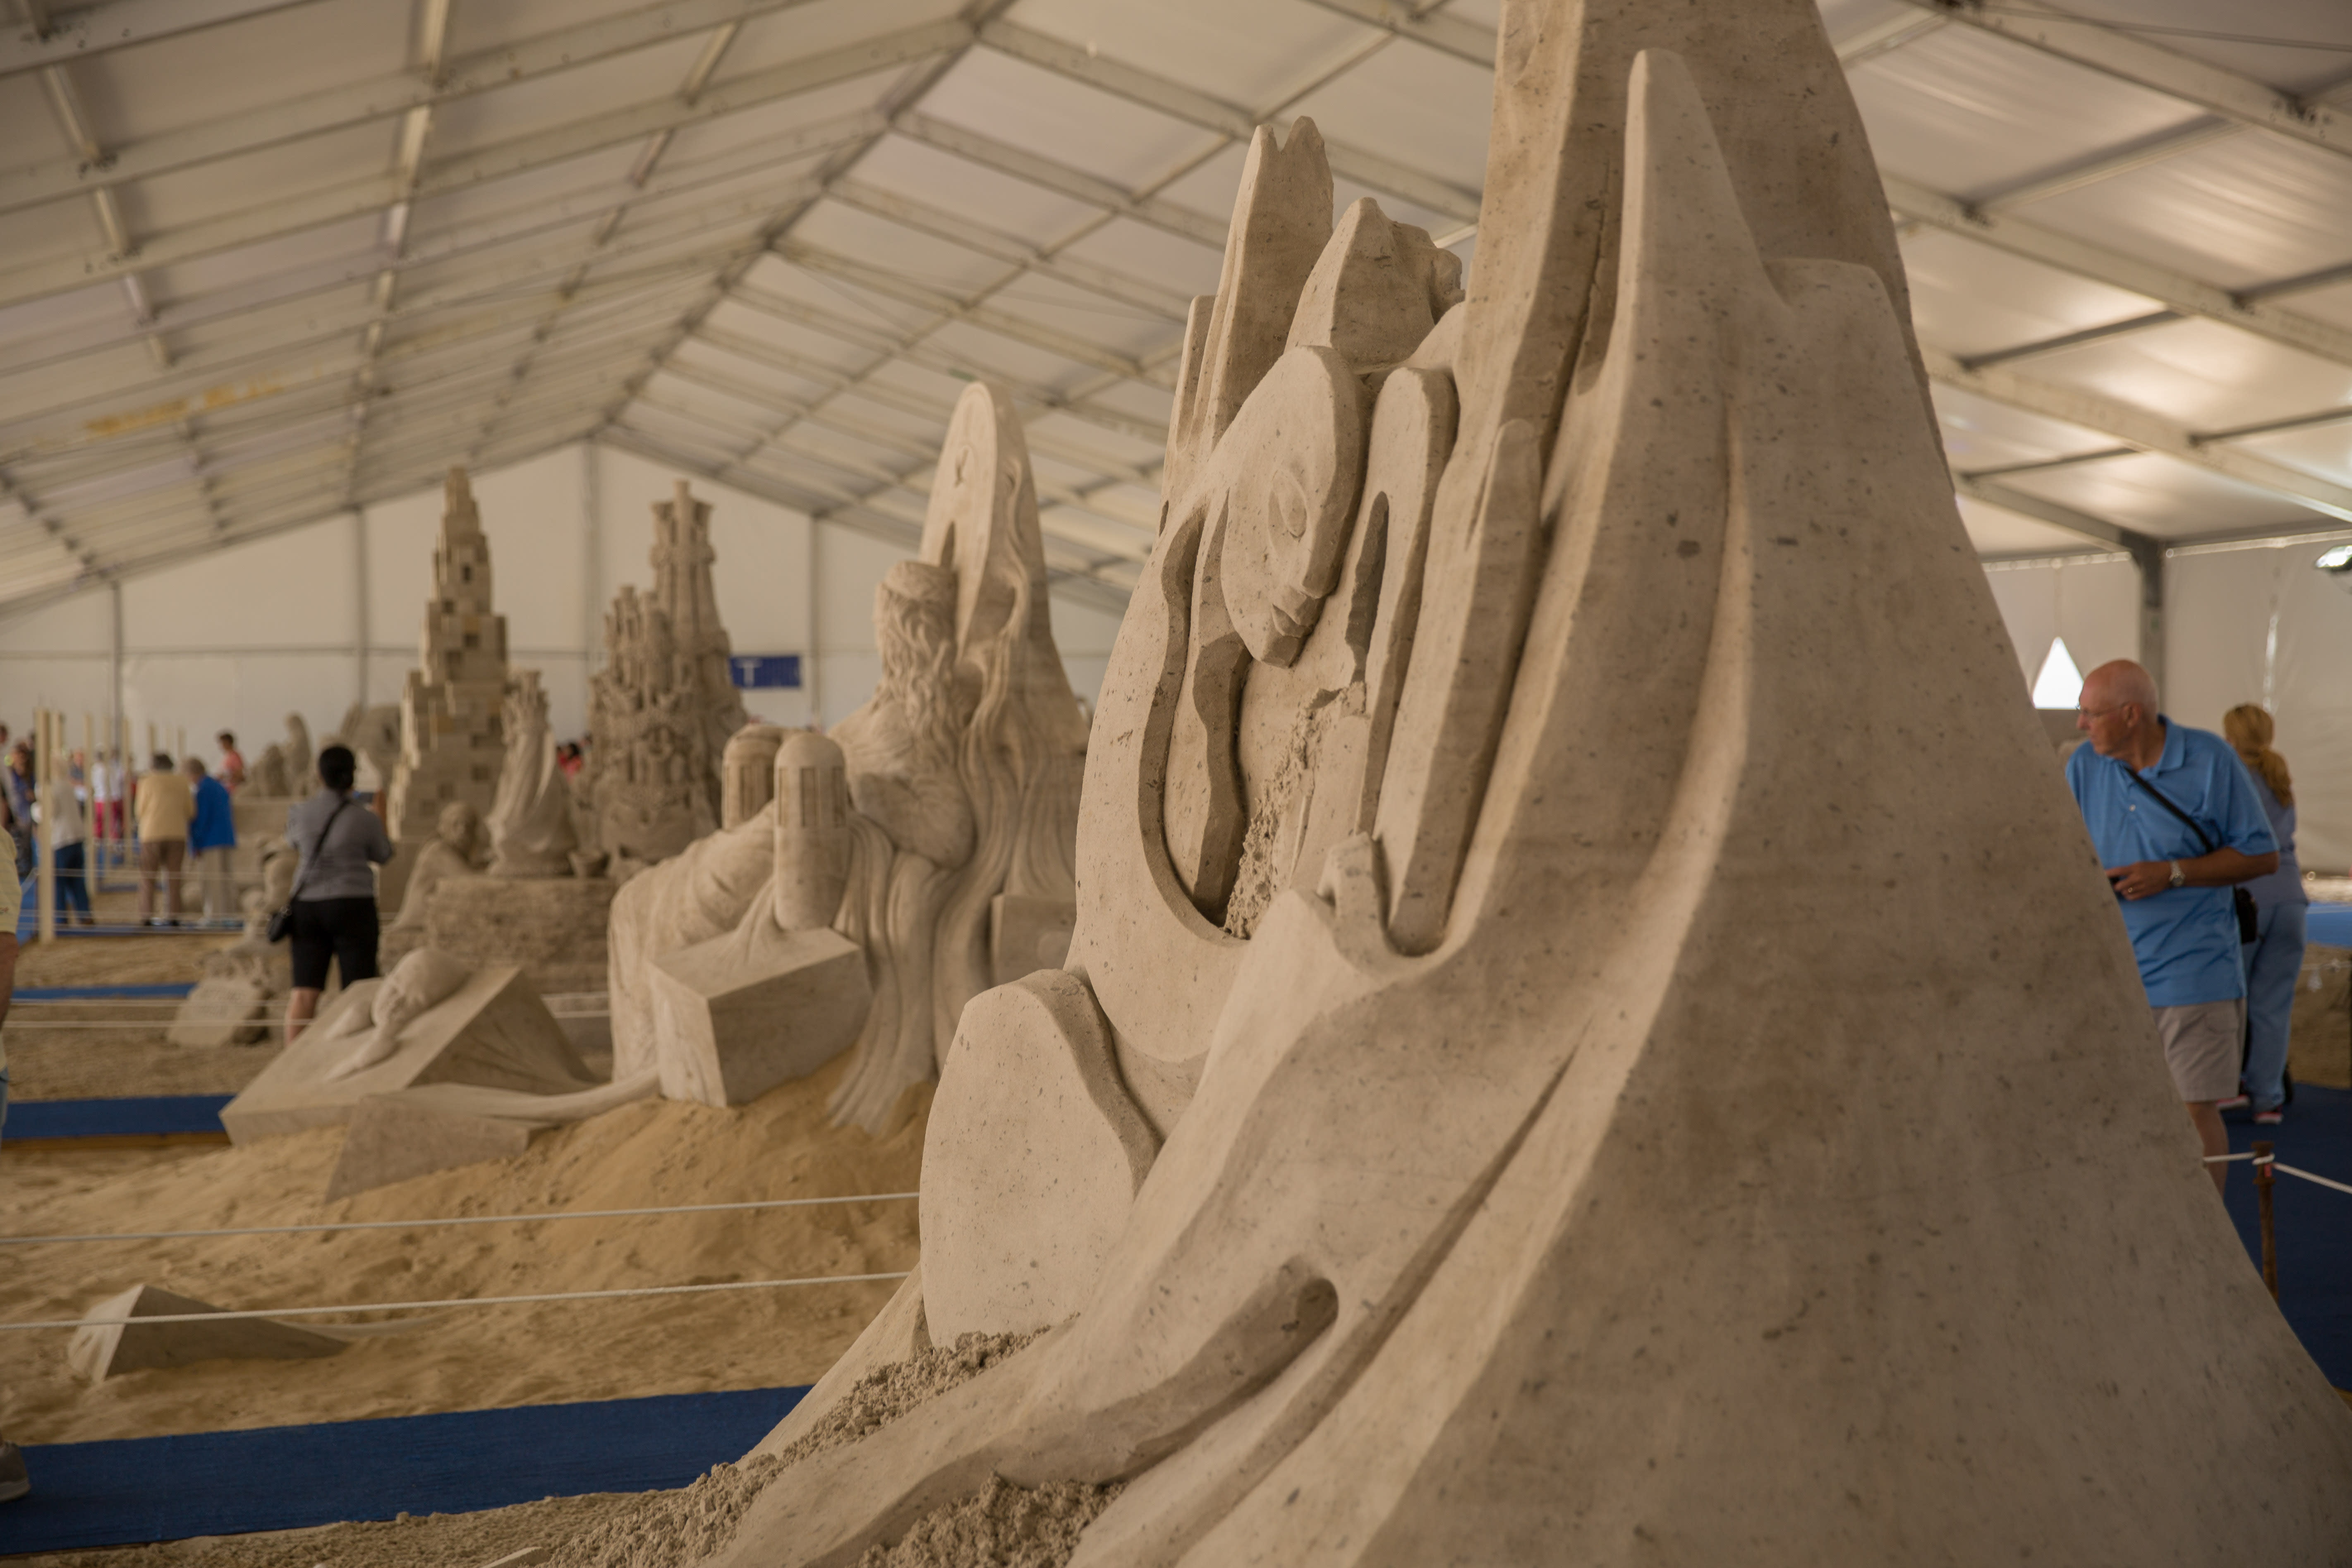 International Sandsculpting Championship